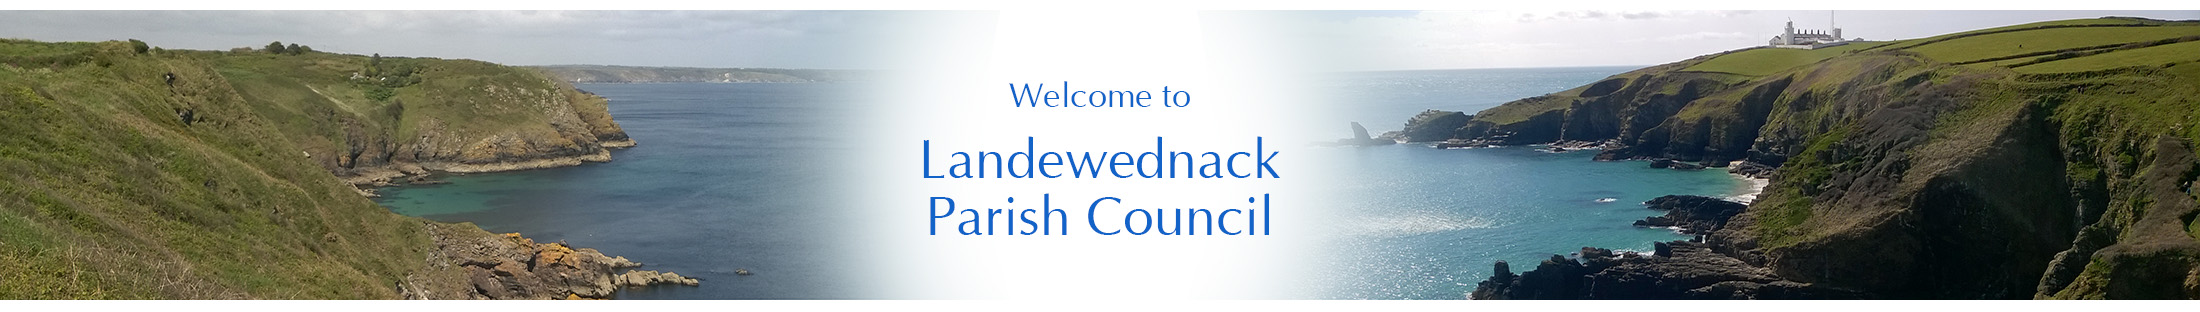 Header Image for Landewednack Parish Council